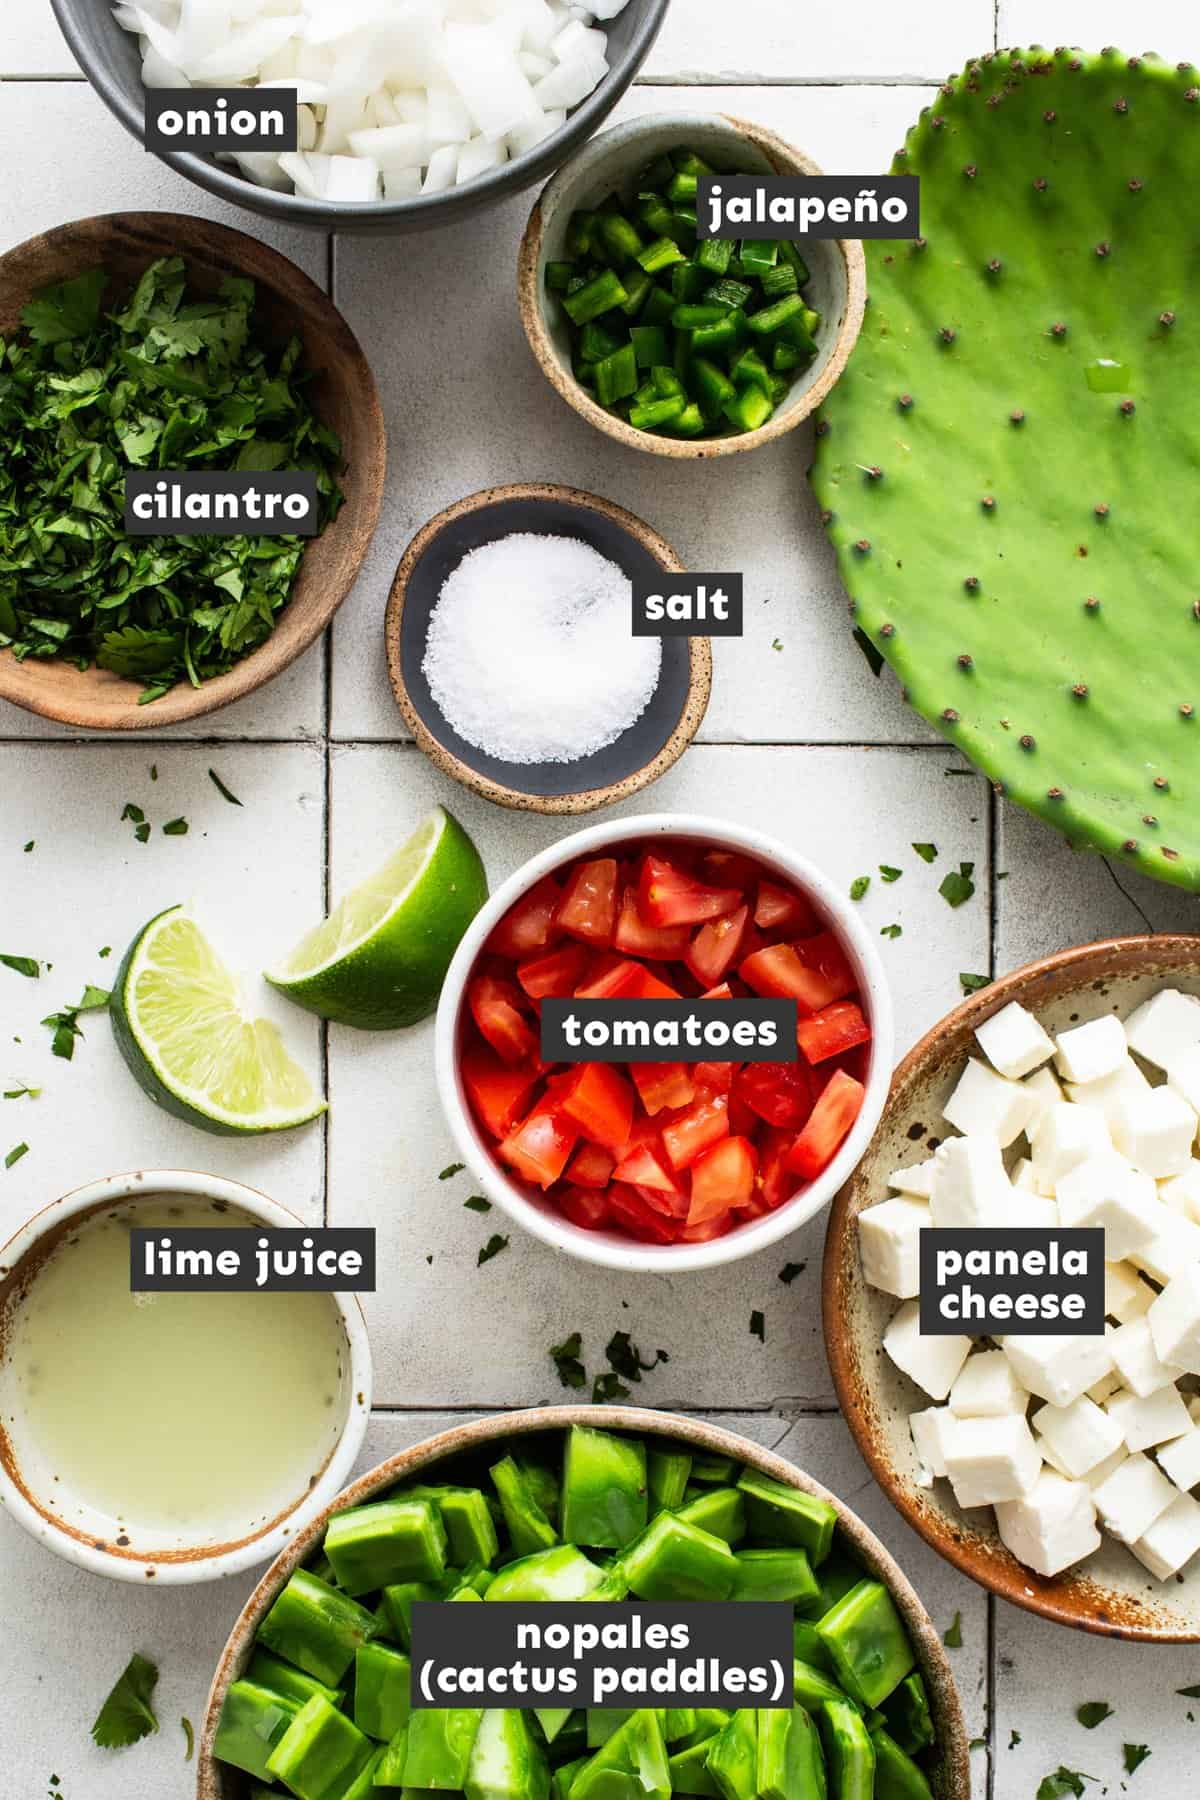 Ingredients for ensalada de nopales on the table